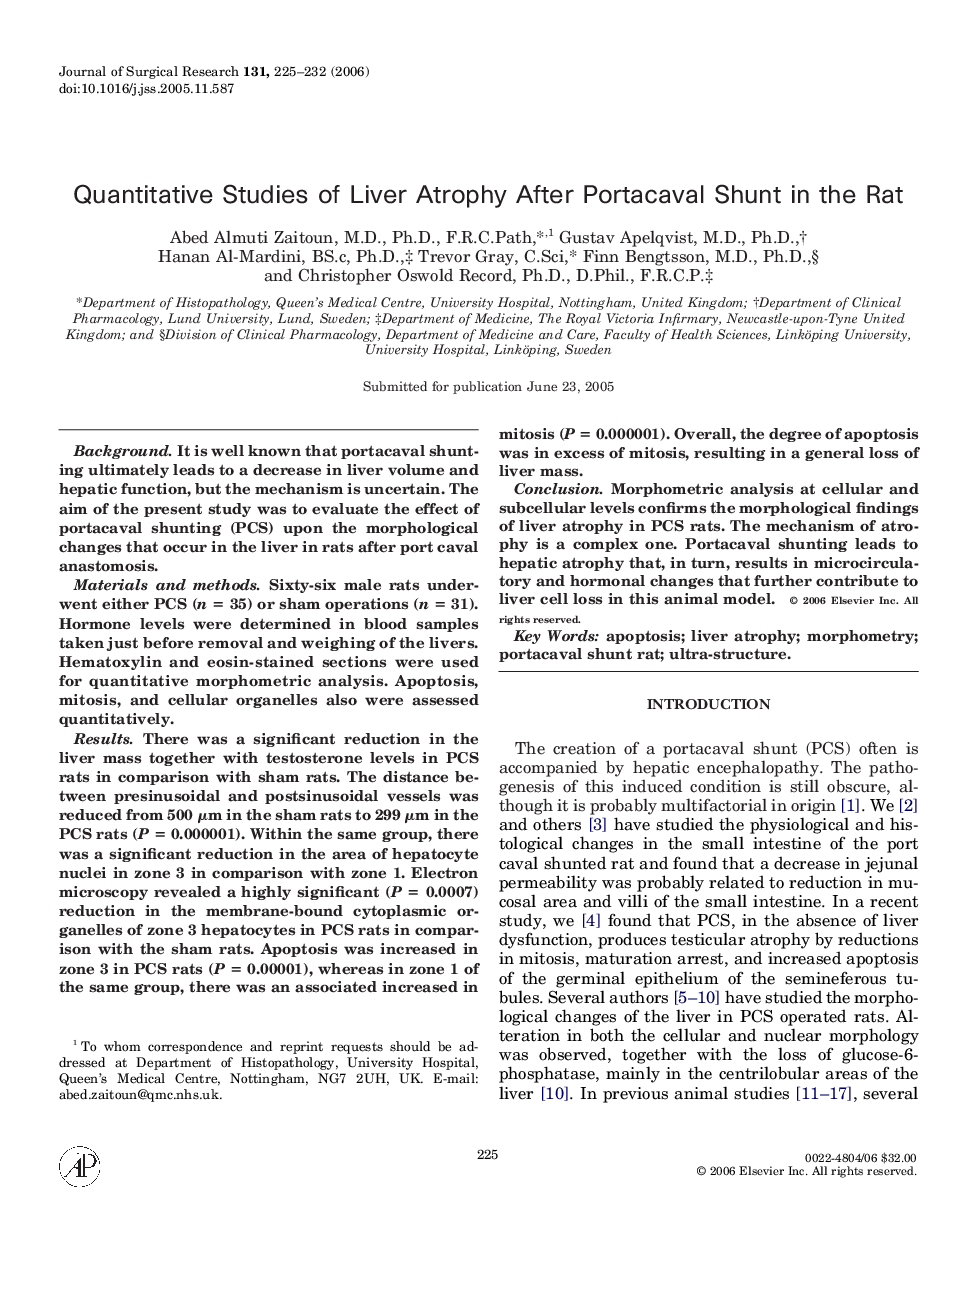 Quantitative Studies of Liver Atrophy After Portacaval Shunt in the Rat